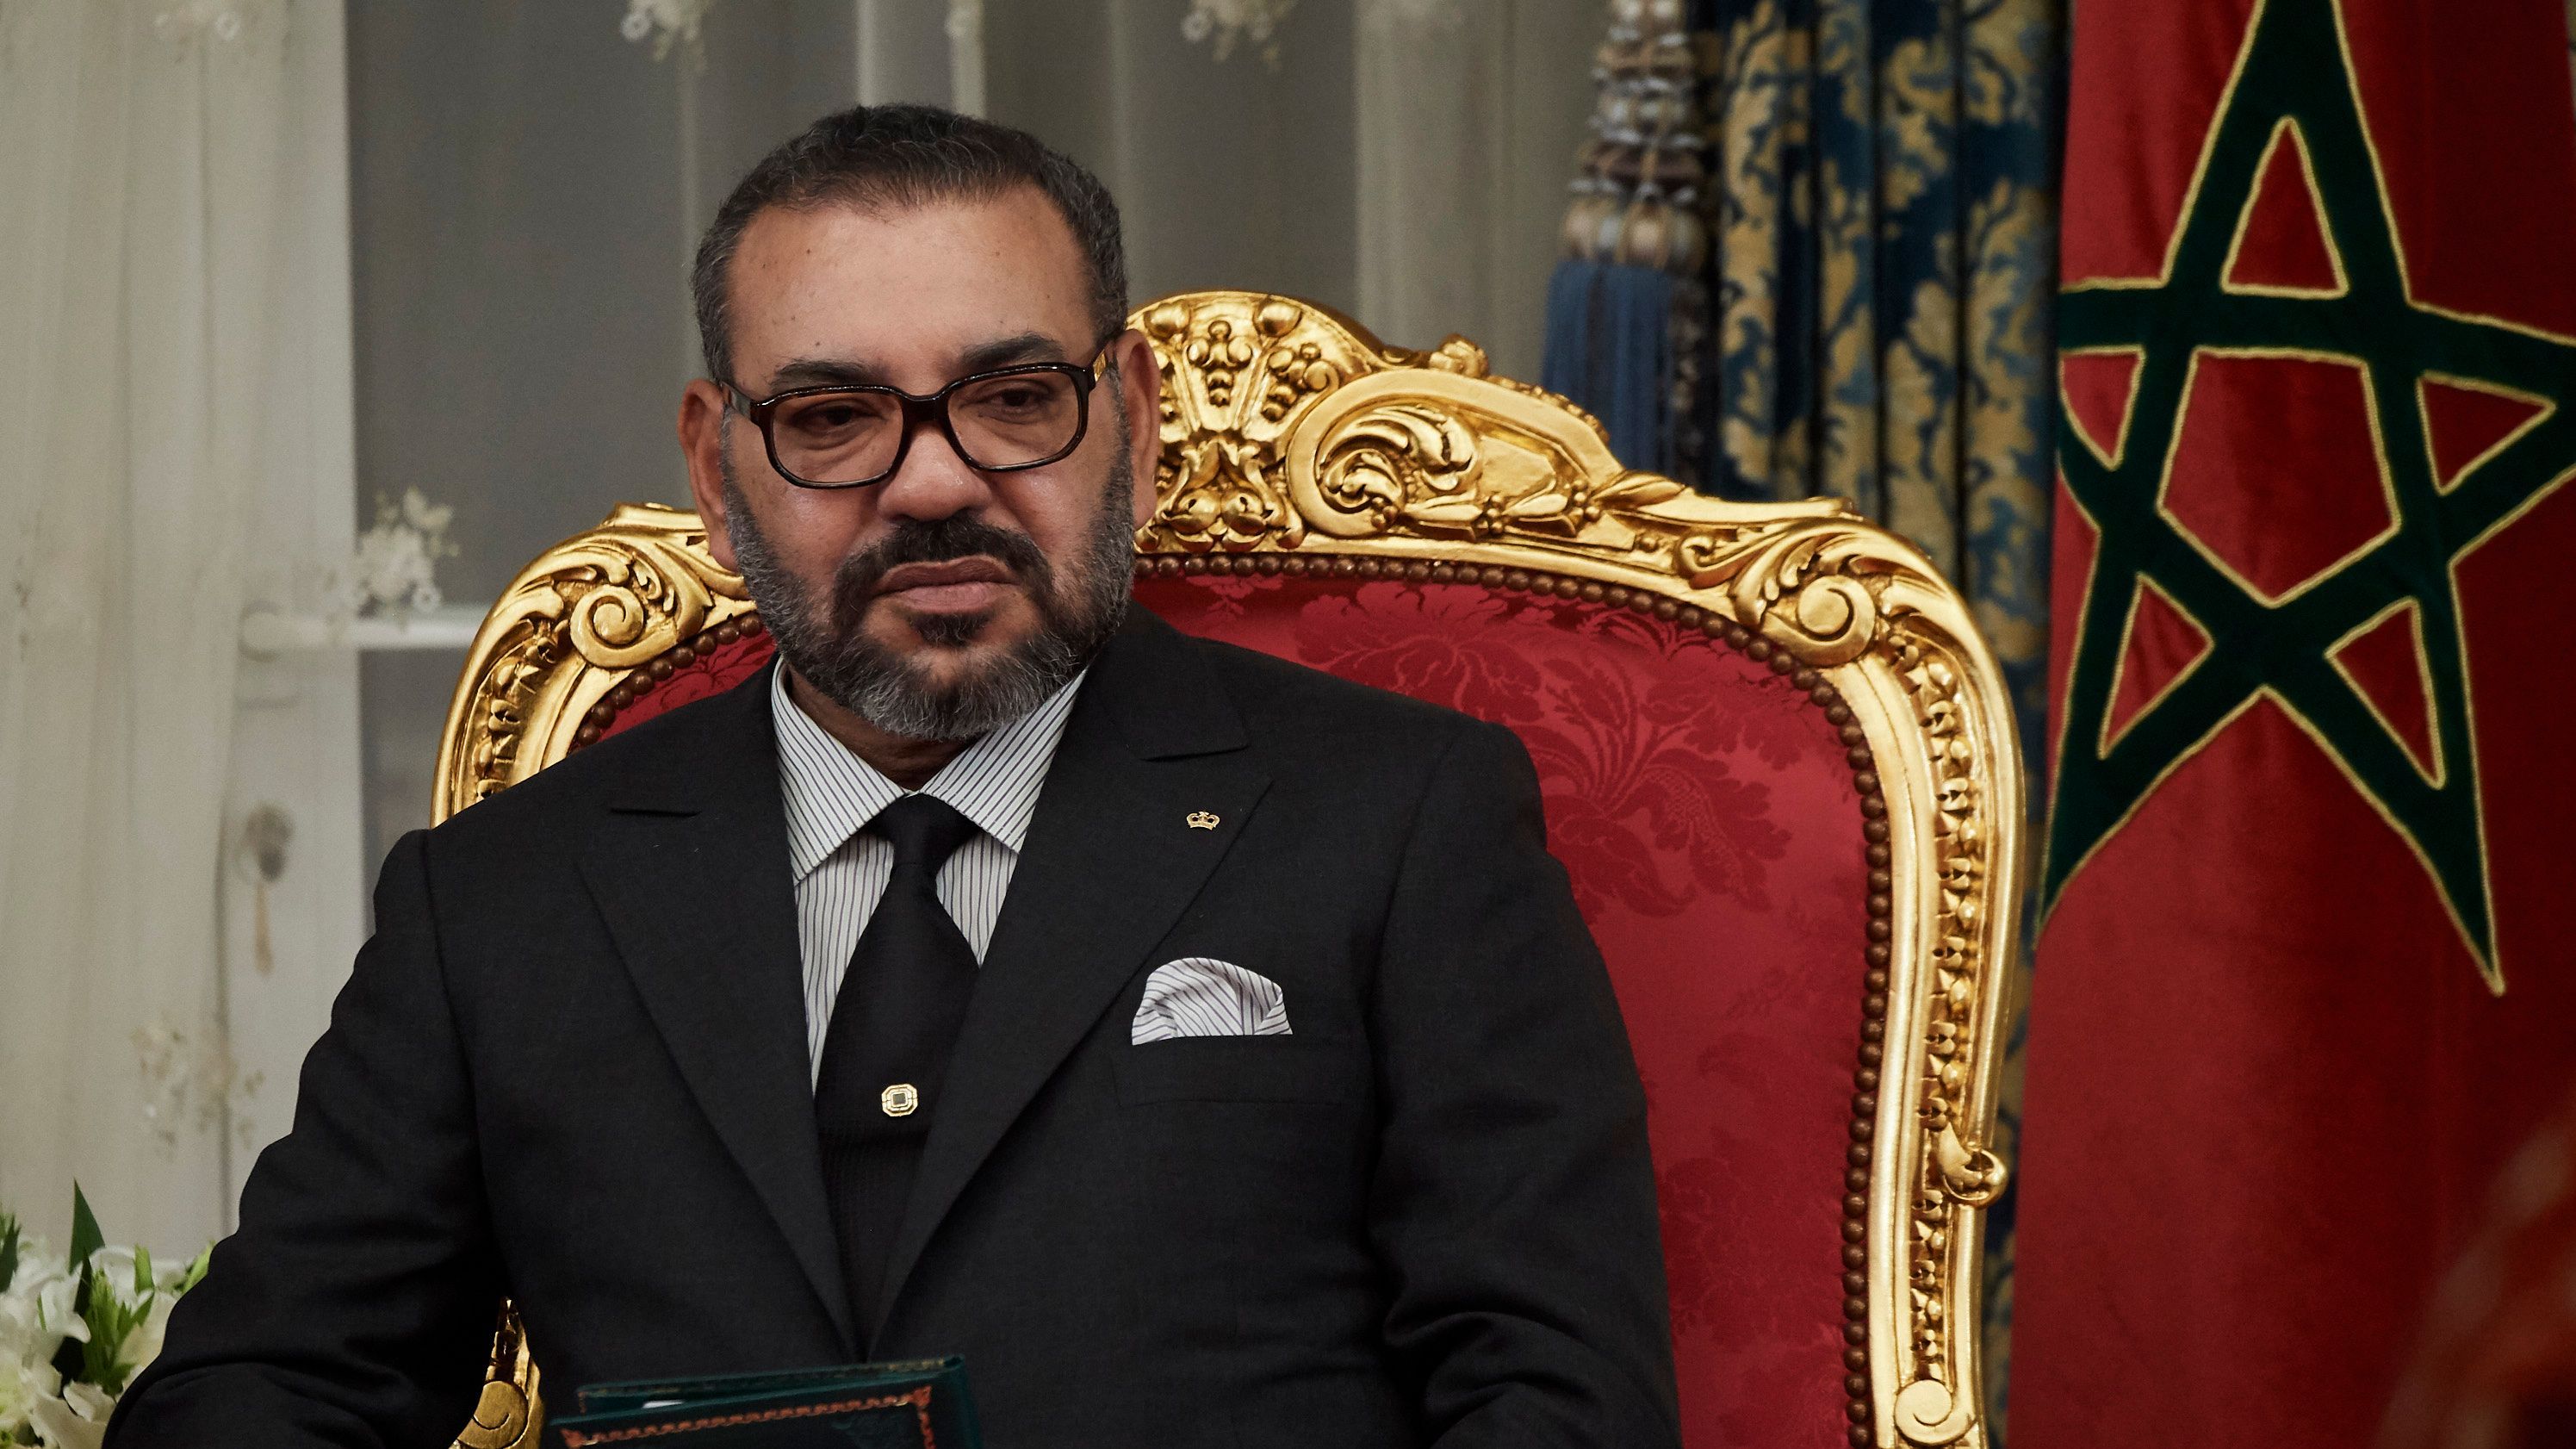 Earthquake in Morocco, Where is King Mohamed VI?